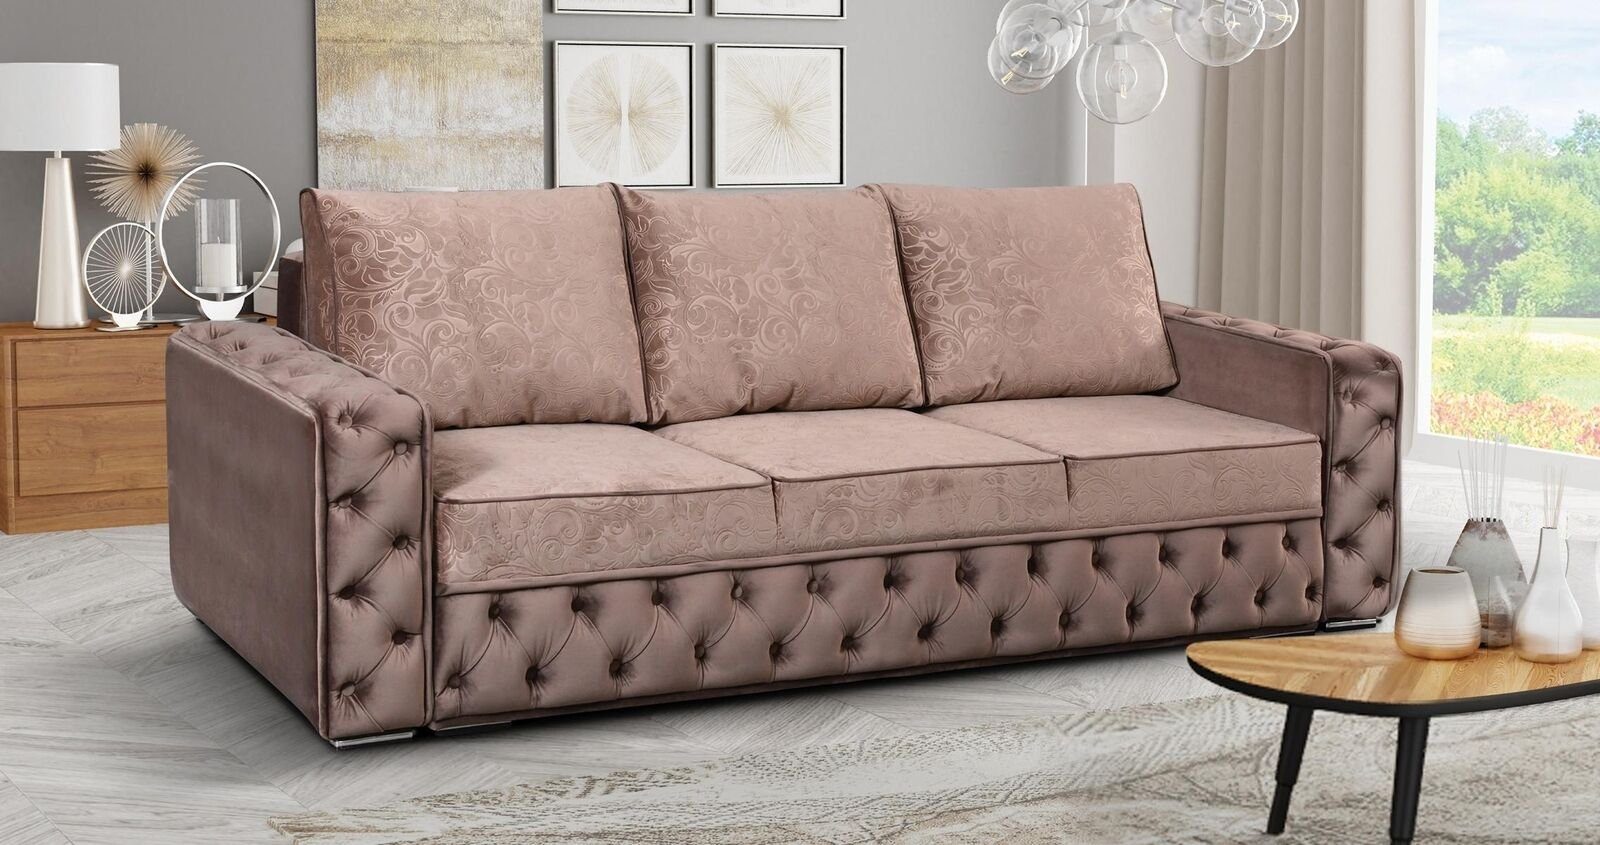 JVmoebel Sofa Chesterfield Design Couchen 4 Sitzplatz Textil Big Sofa Stoff, Made in Europe Rosa